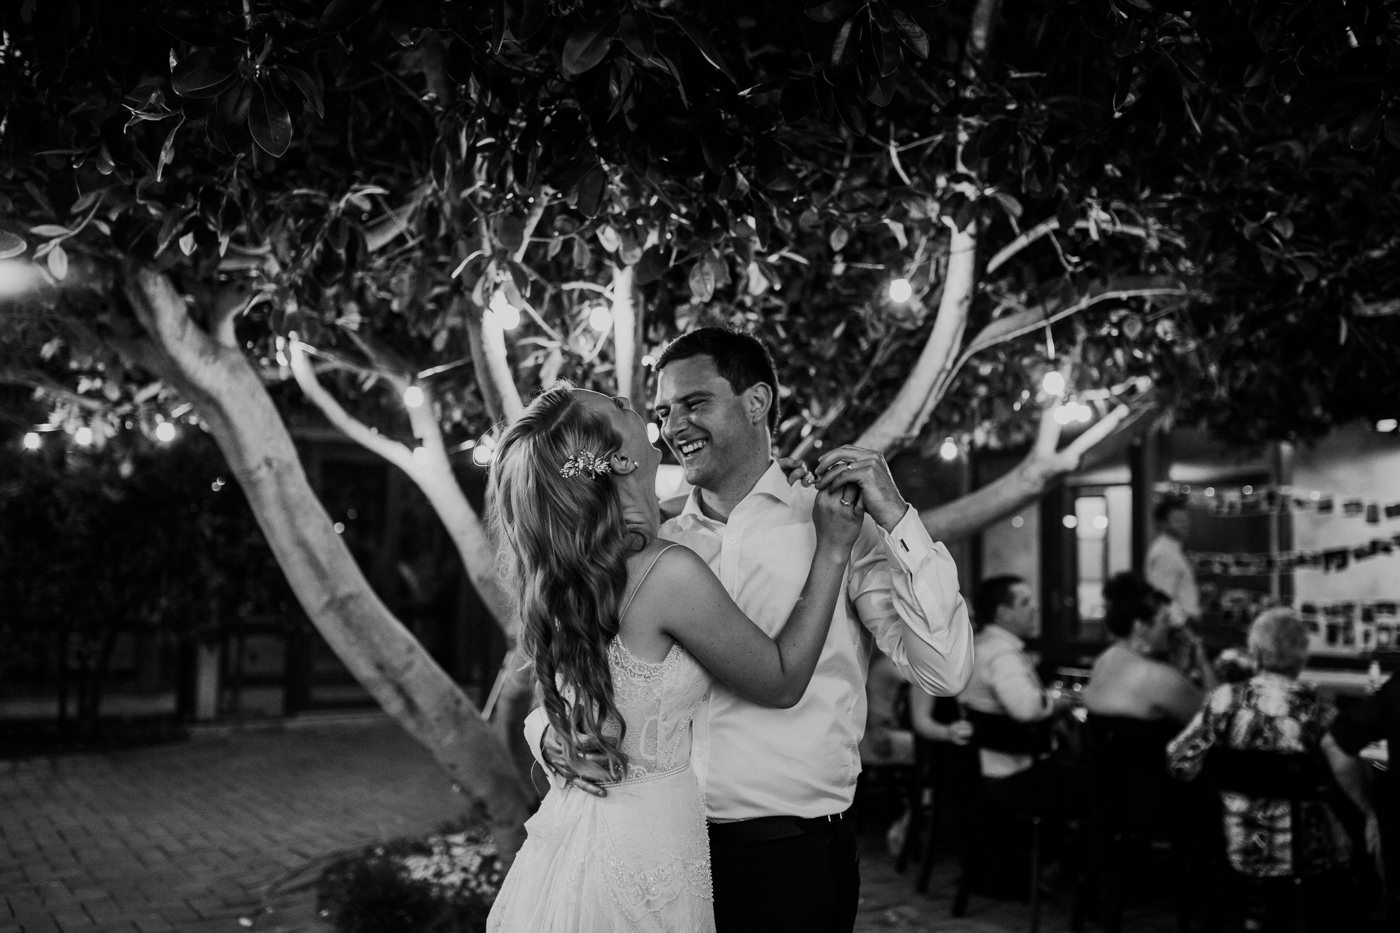 Anthony & Eliet - Wagga Wagga Wedding - Country NSW - Samantha Heather Photography-170.jpg